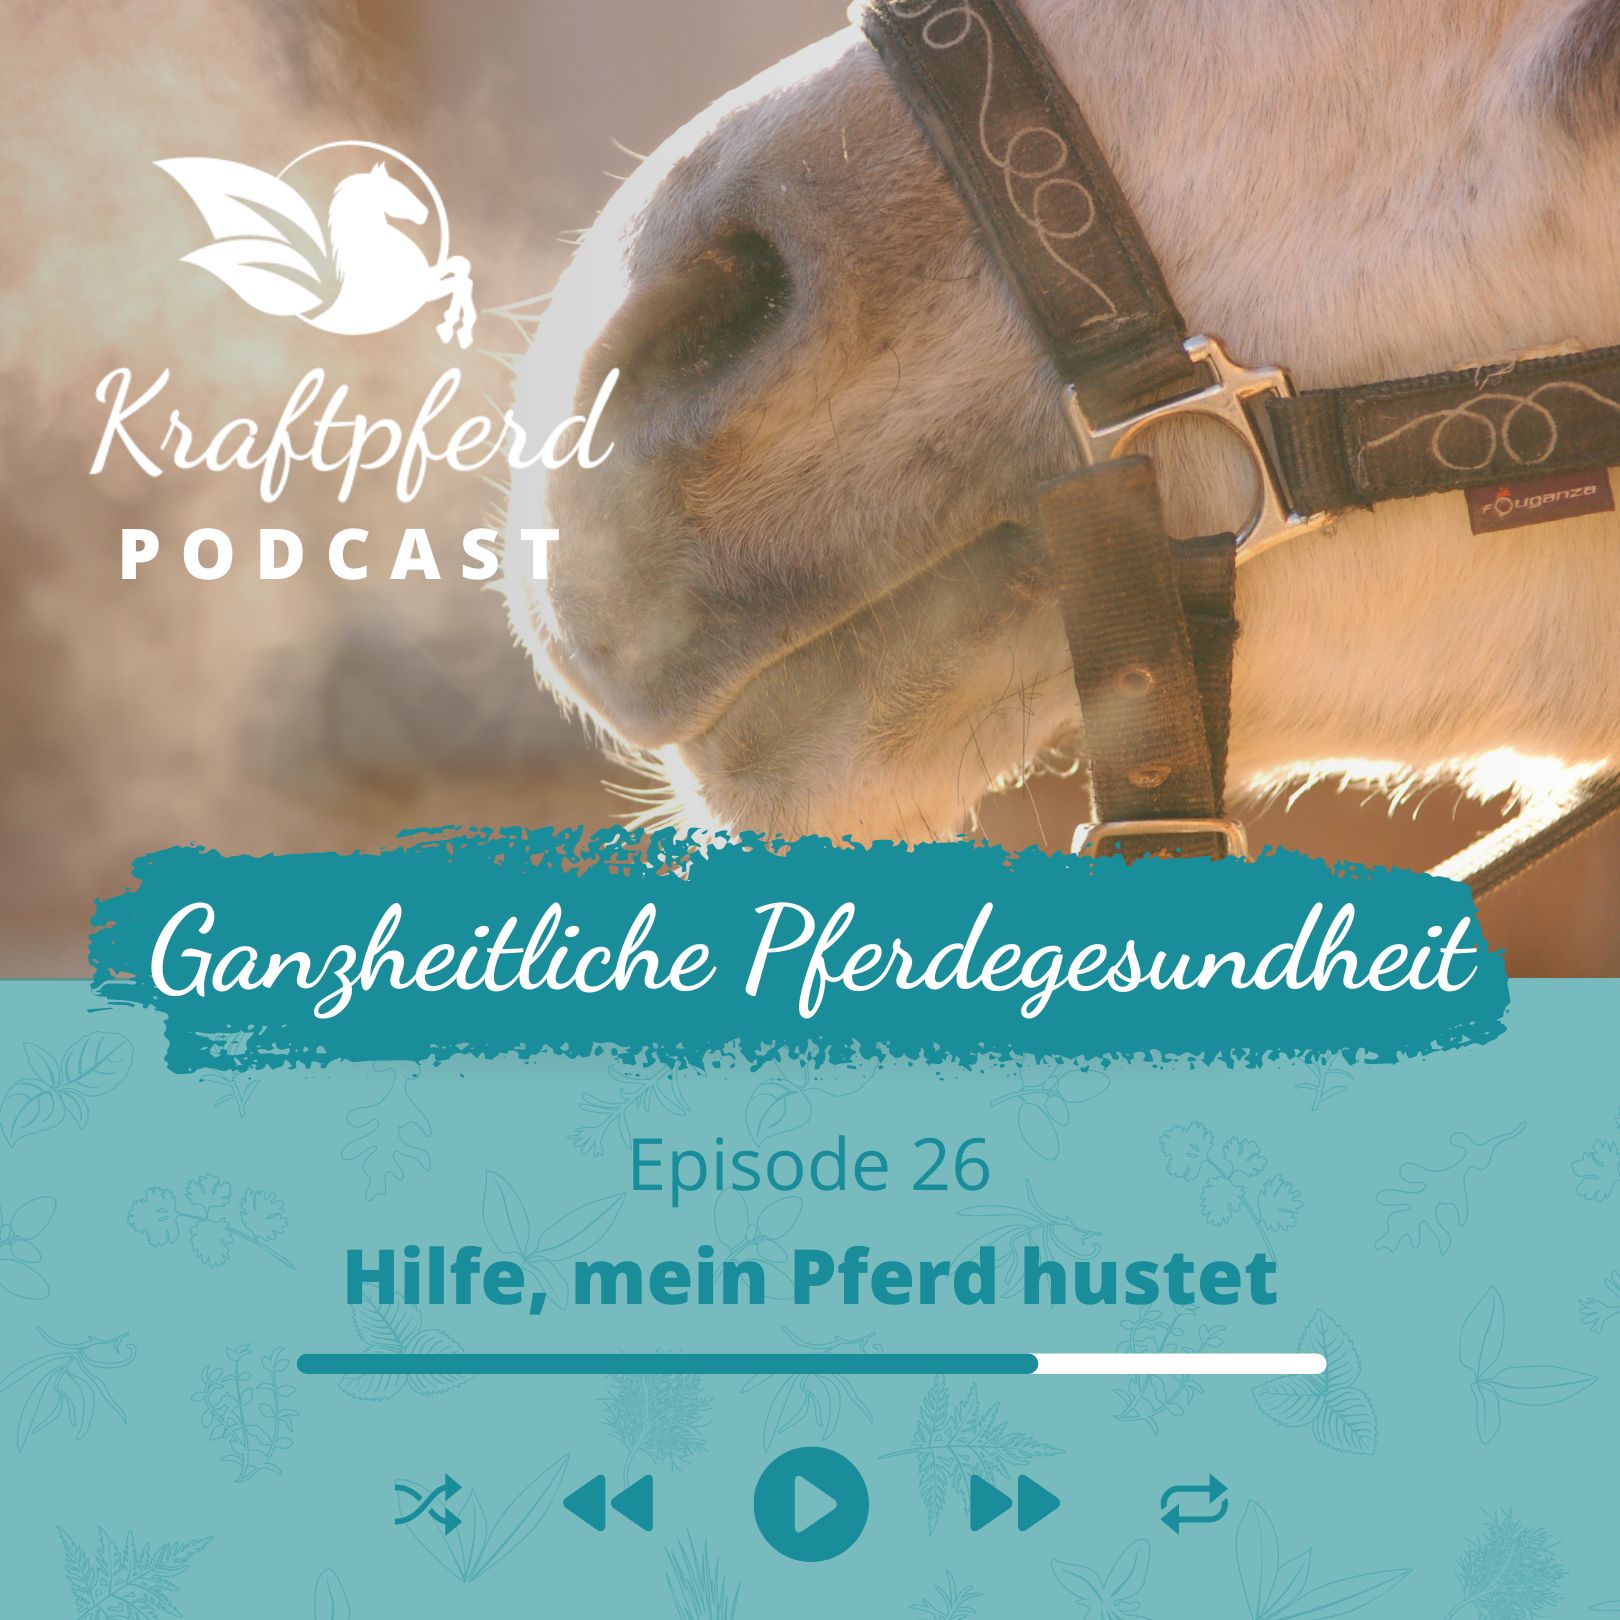 Kraftpferd Podcast #26 Hilfe, mein Pferd hustet